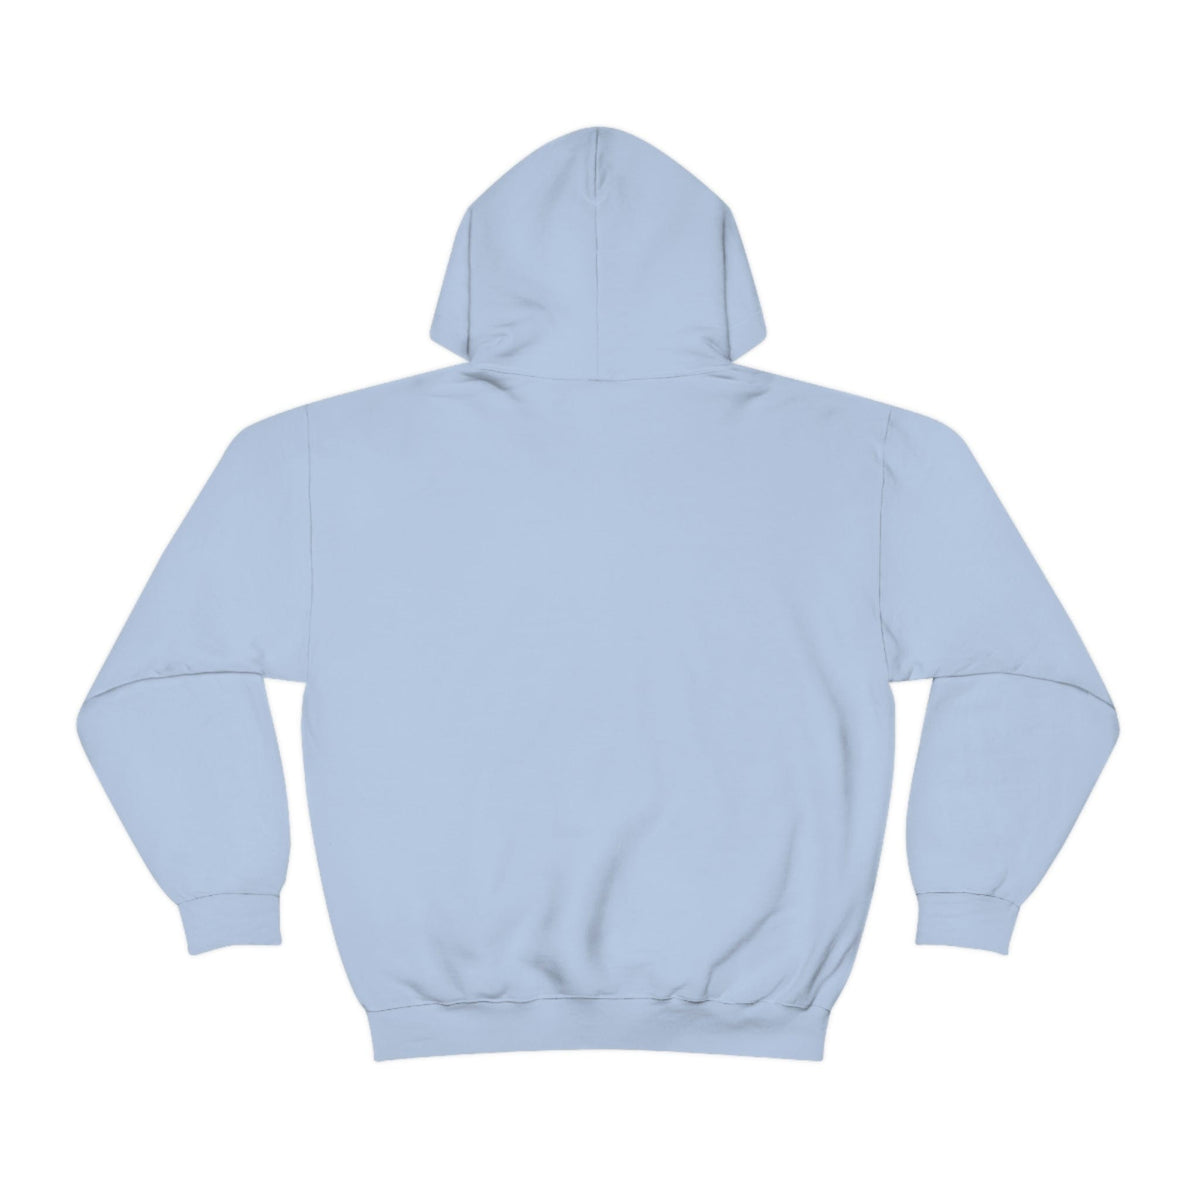 Be Good - Unisex Heavy Blend™ Hooded Sweatshirt